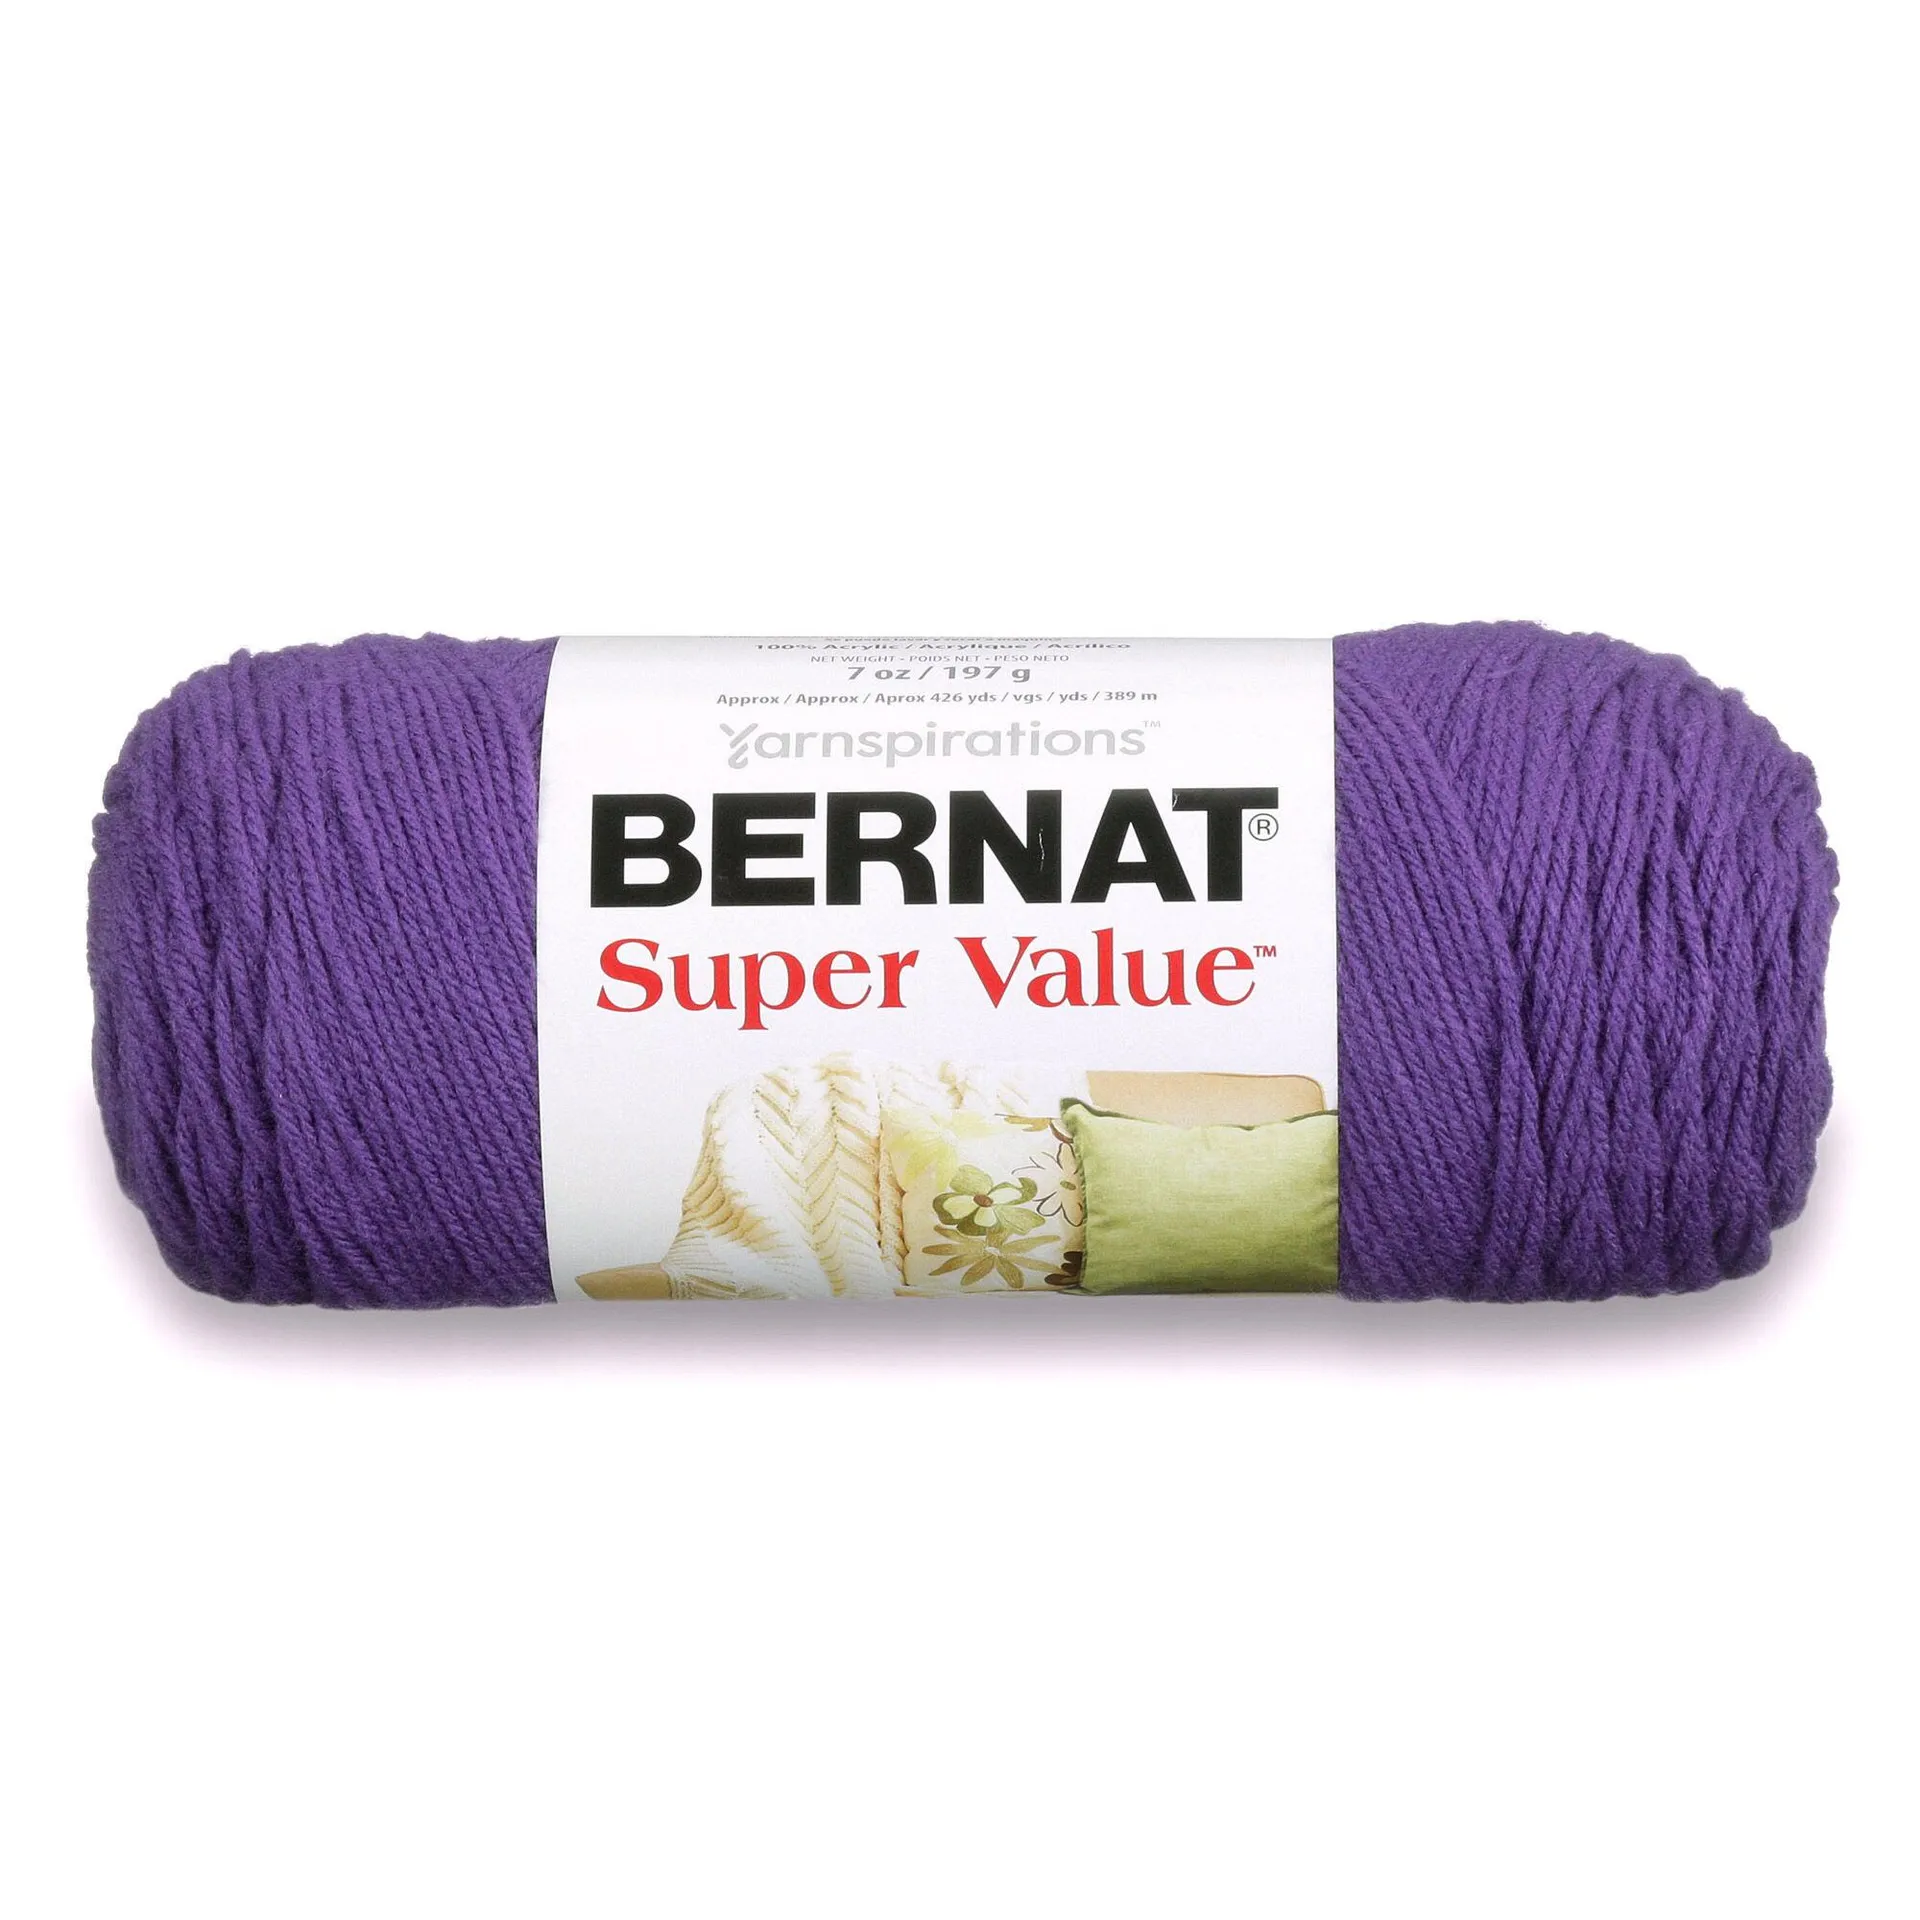 Super Value - 197g - Bernat